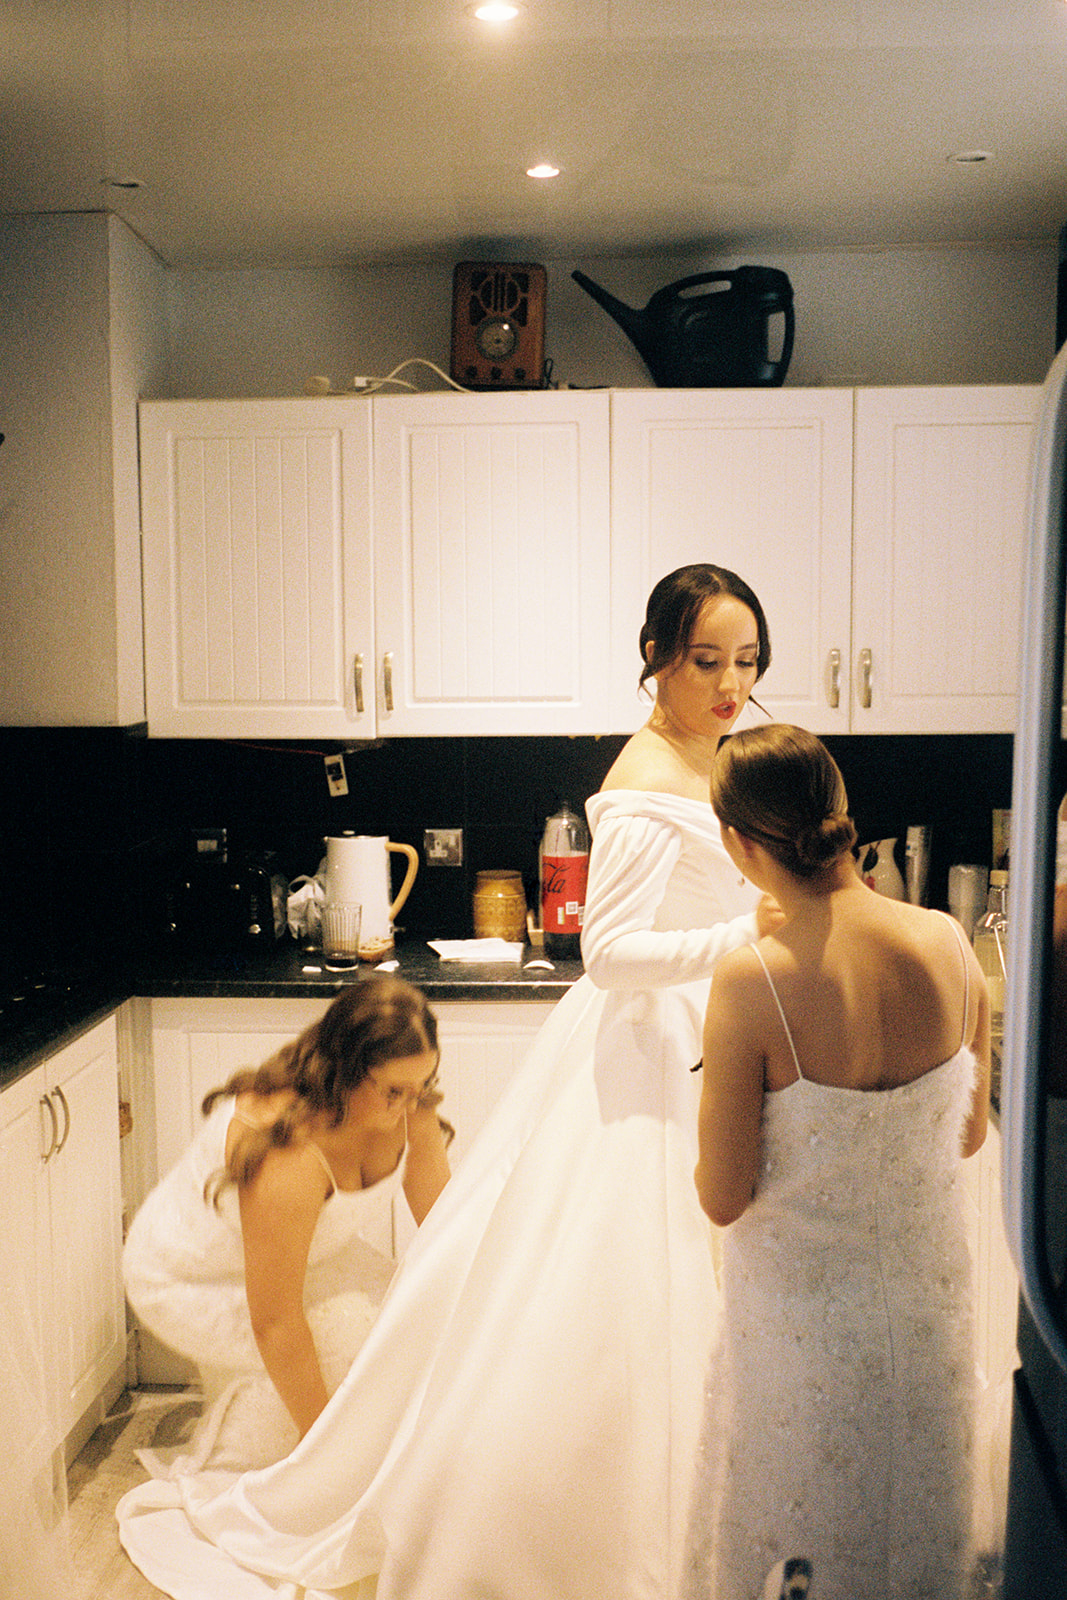 uk wedding 35mm film photographer